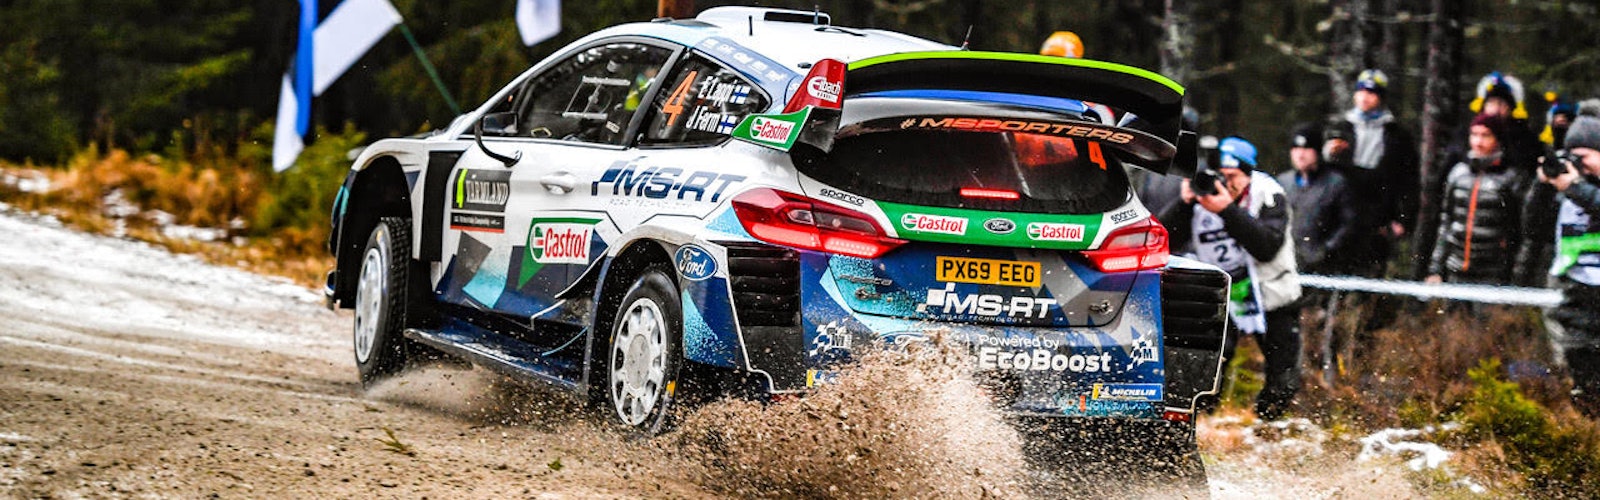 Lappi M-Sport Rally Sweden